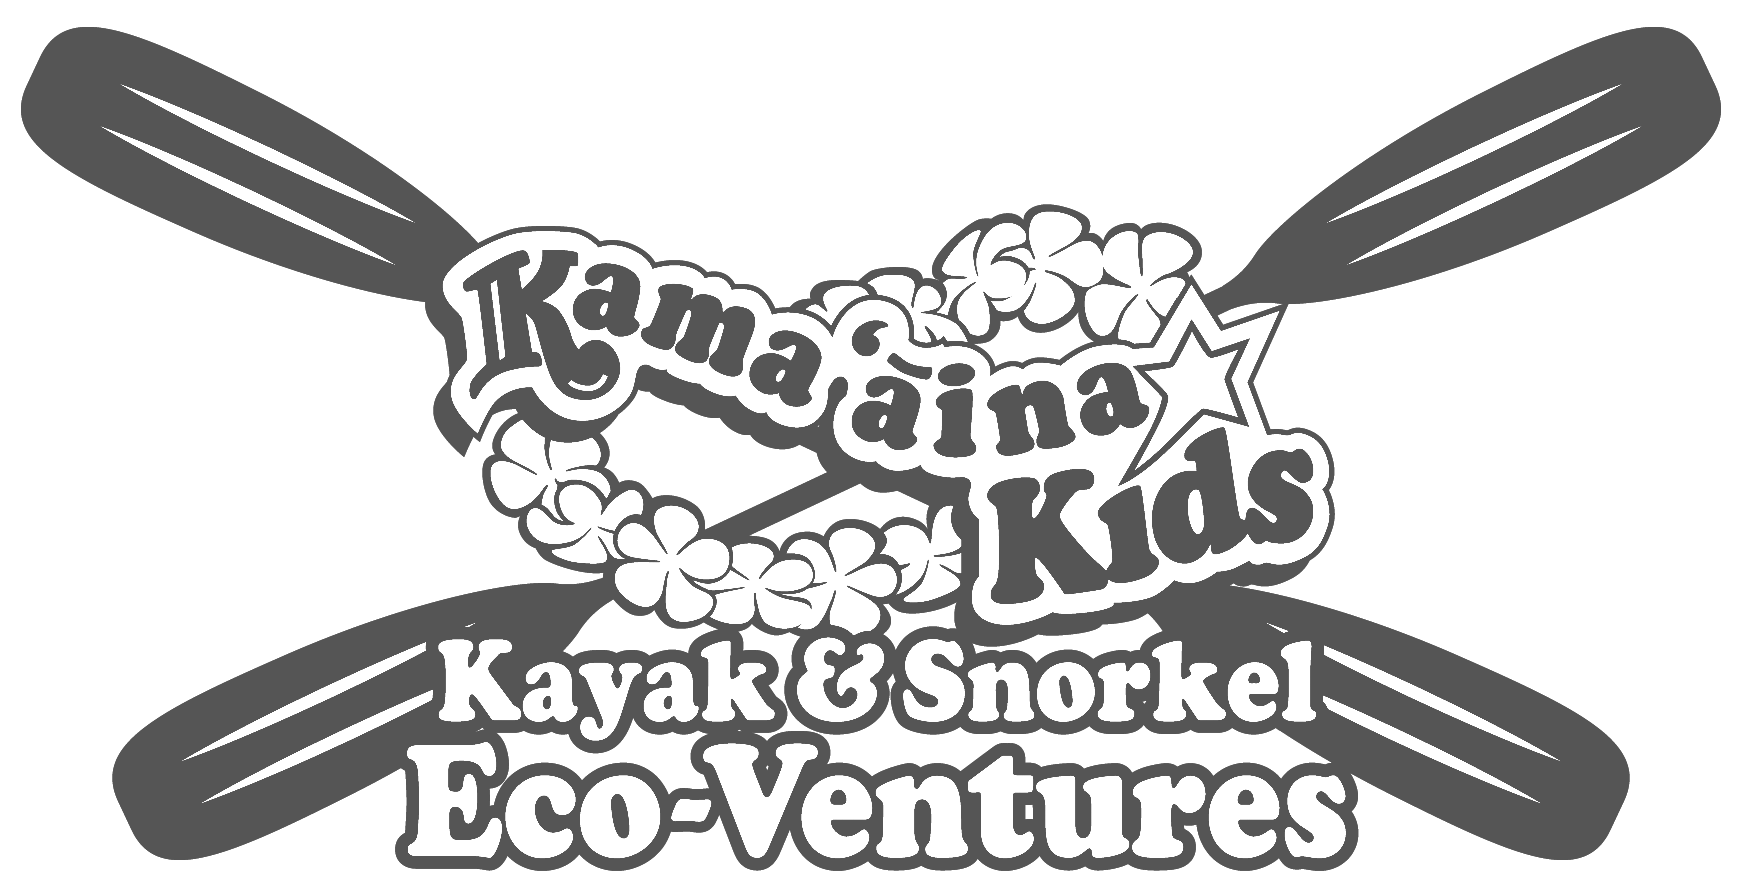 Holokai Kayak and Snorkel Adventure